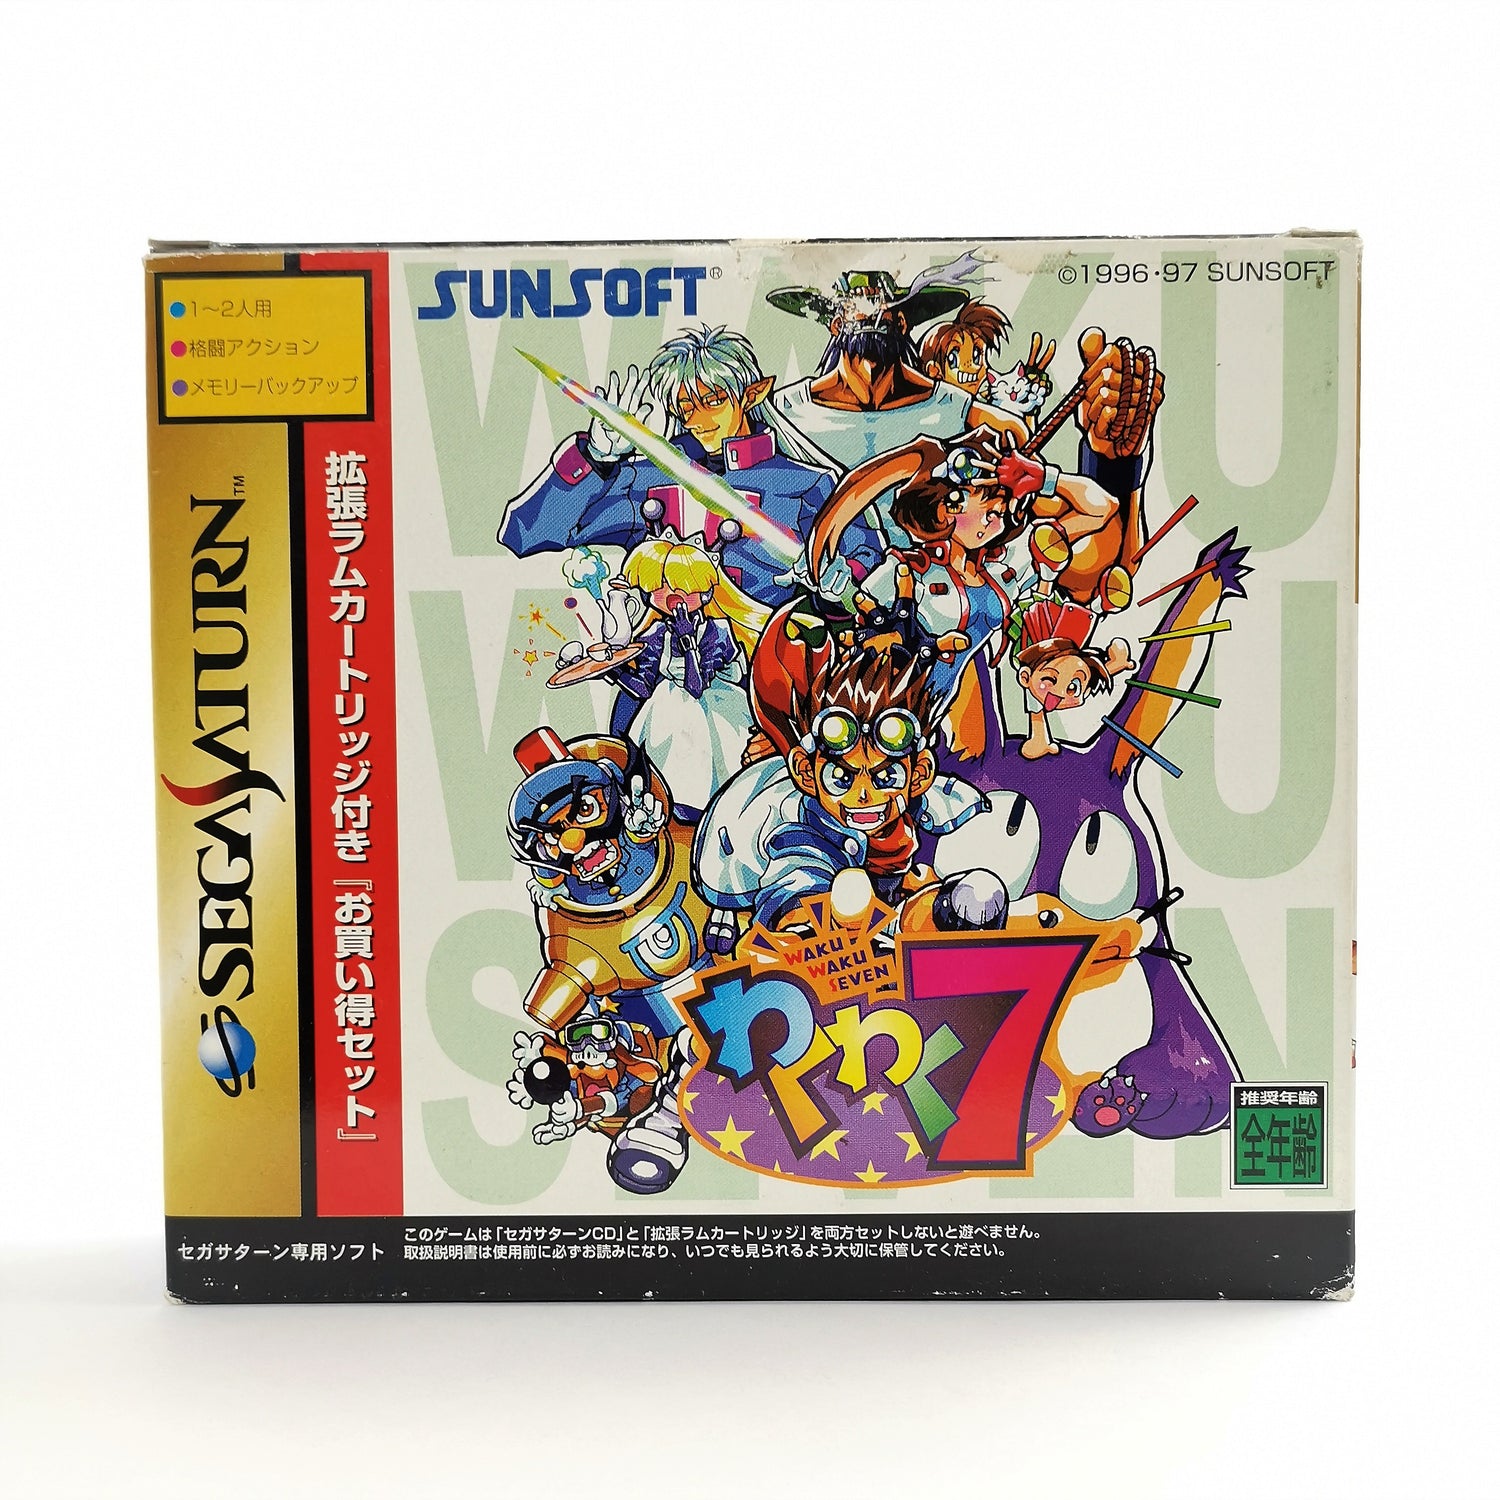 Sega Saturn Game : Waku Waku Seven 7 - Sunsoft | NTSC-J JAPAN version - original packaging